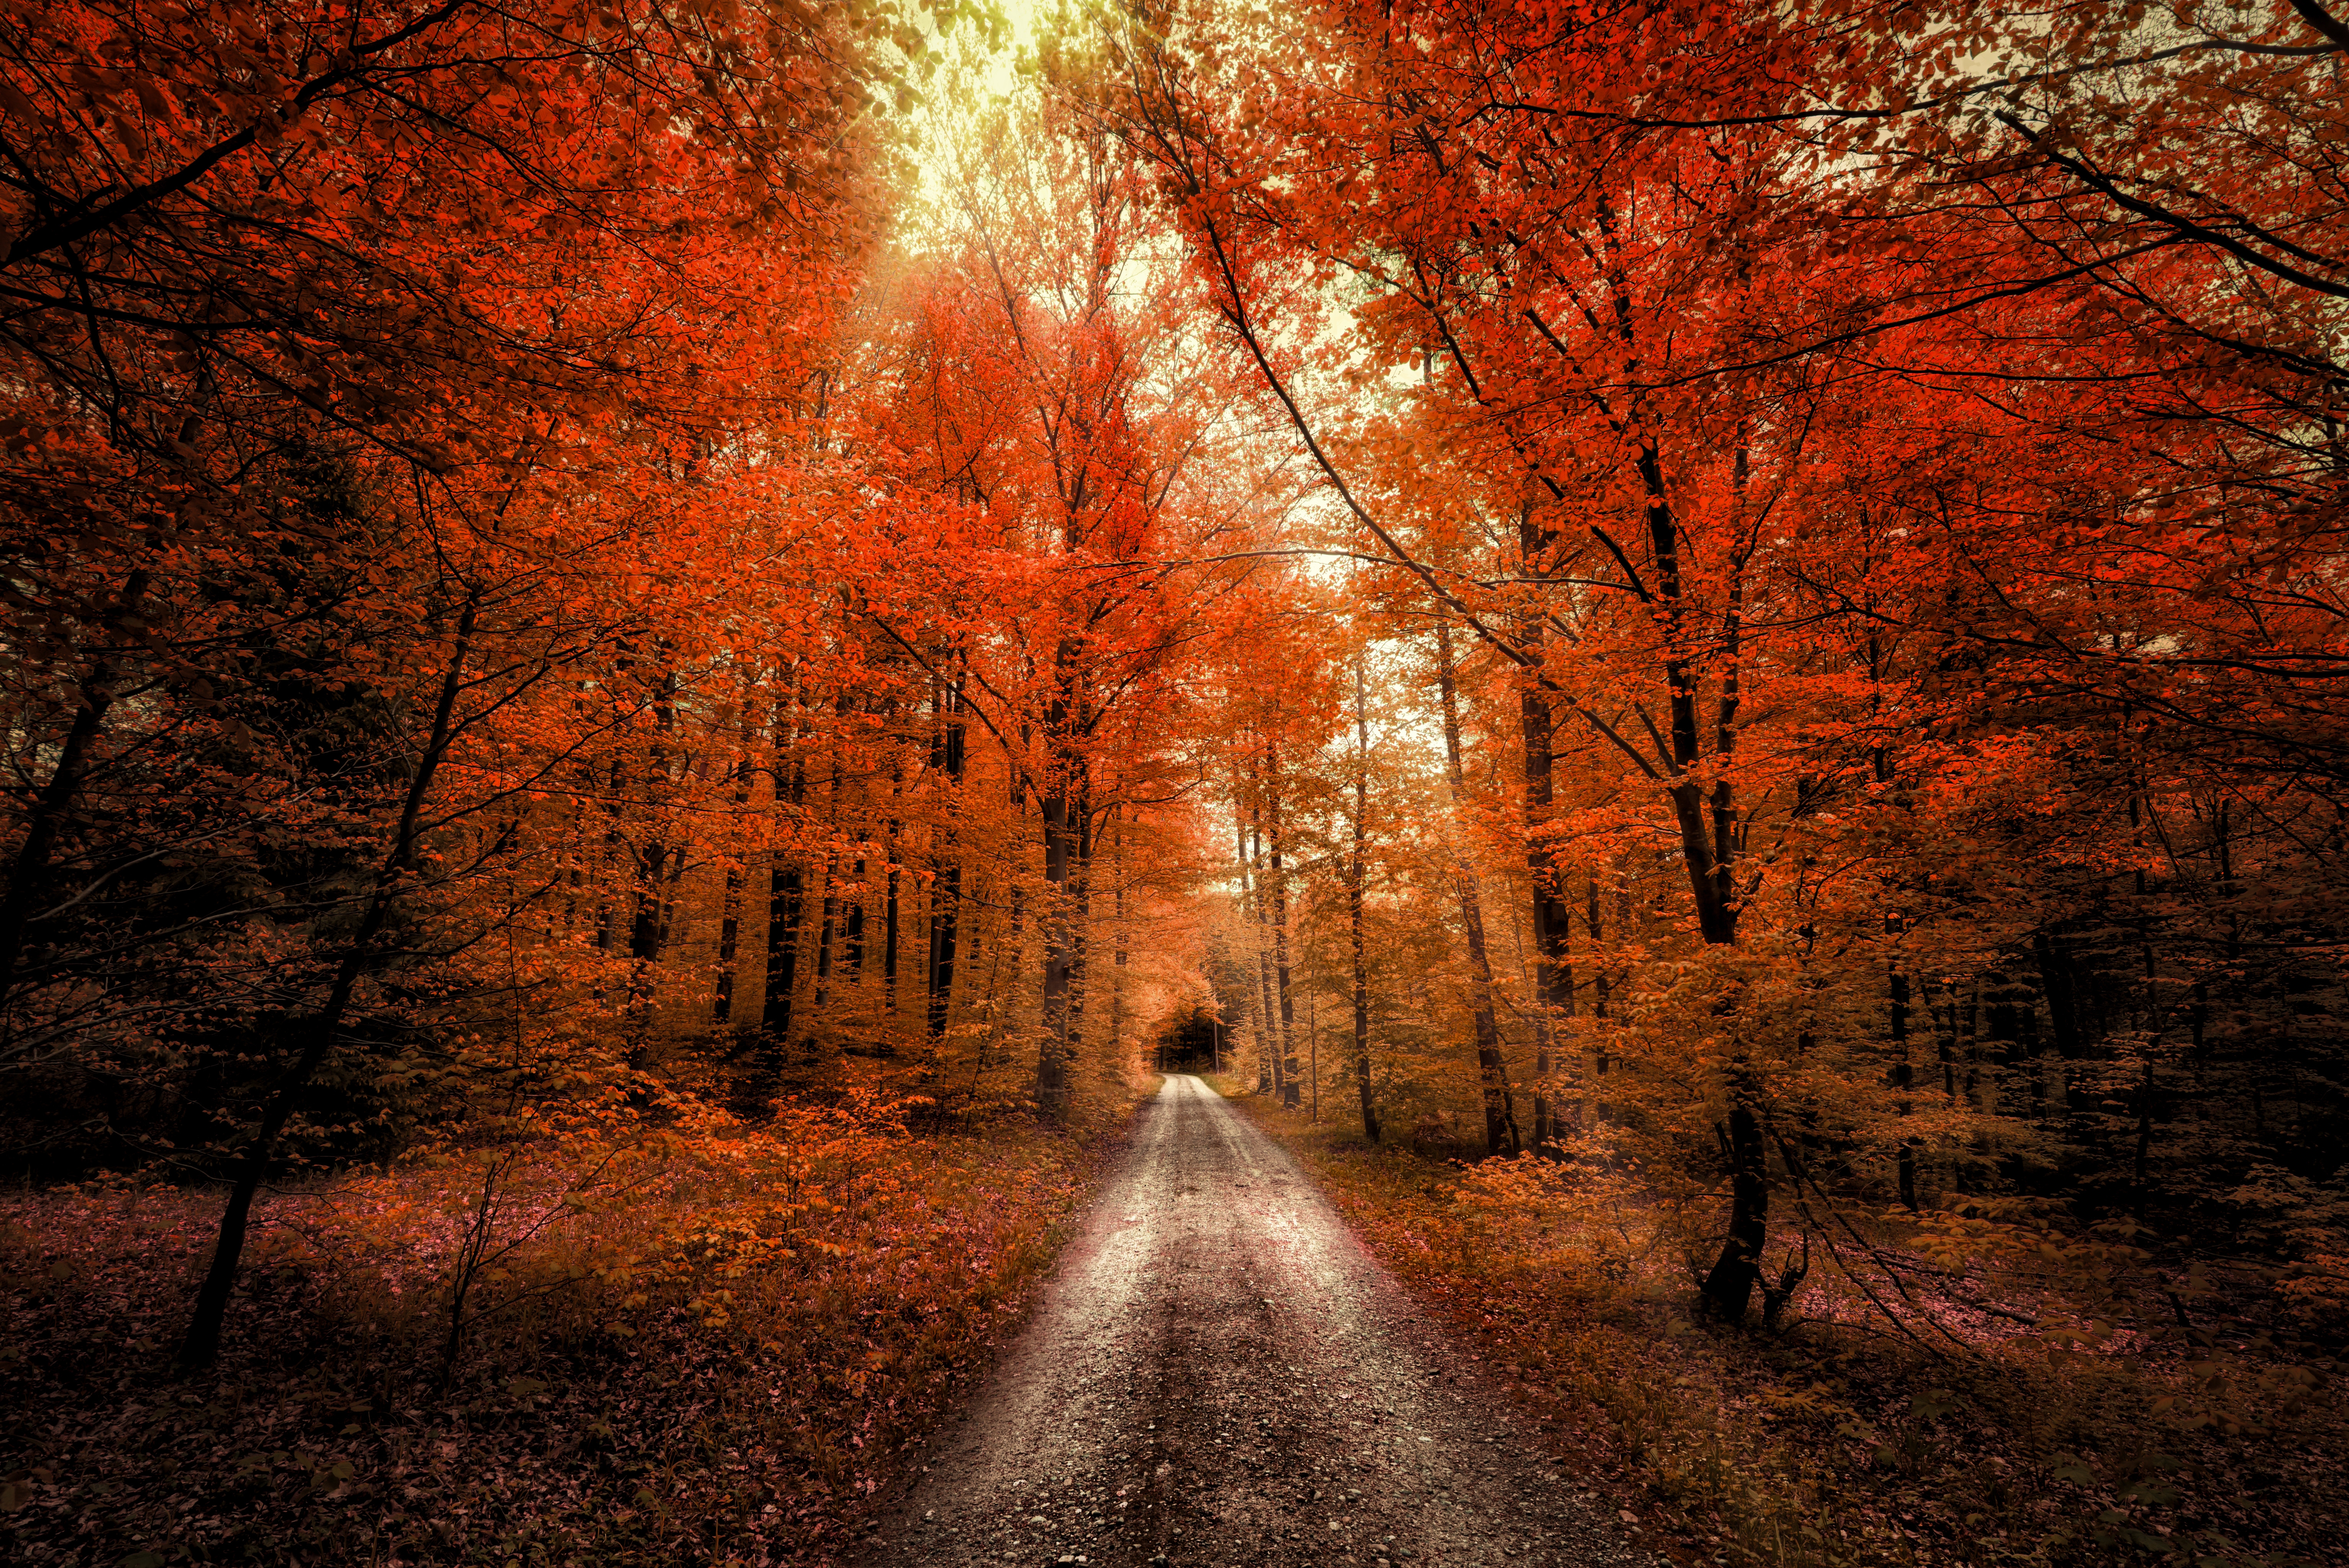 HD wallpaper, Autumn Forest, Scenery, Dirt Road, Landscape, Seasons, 5K, Passage